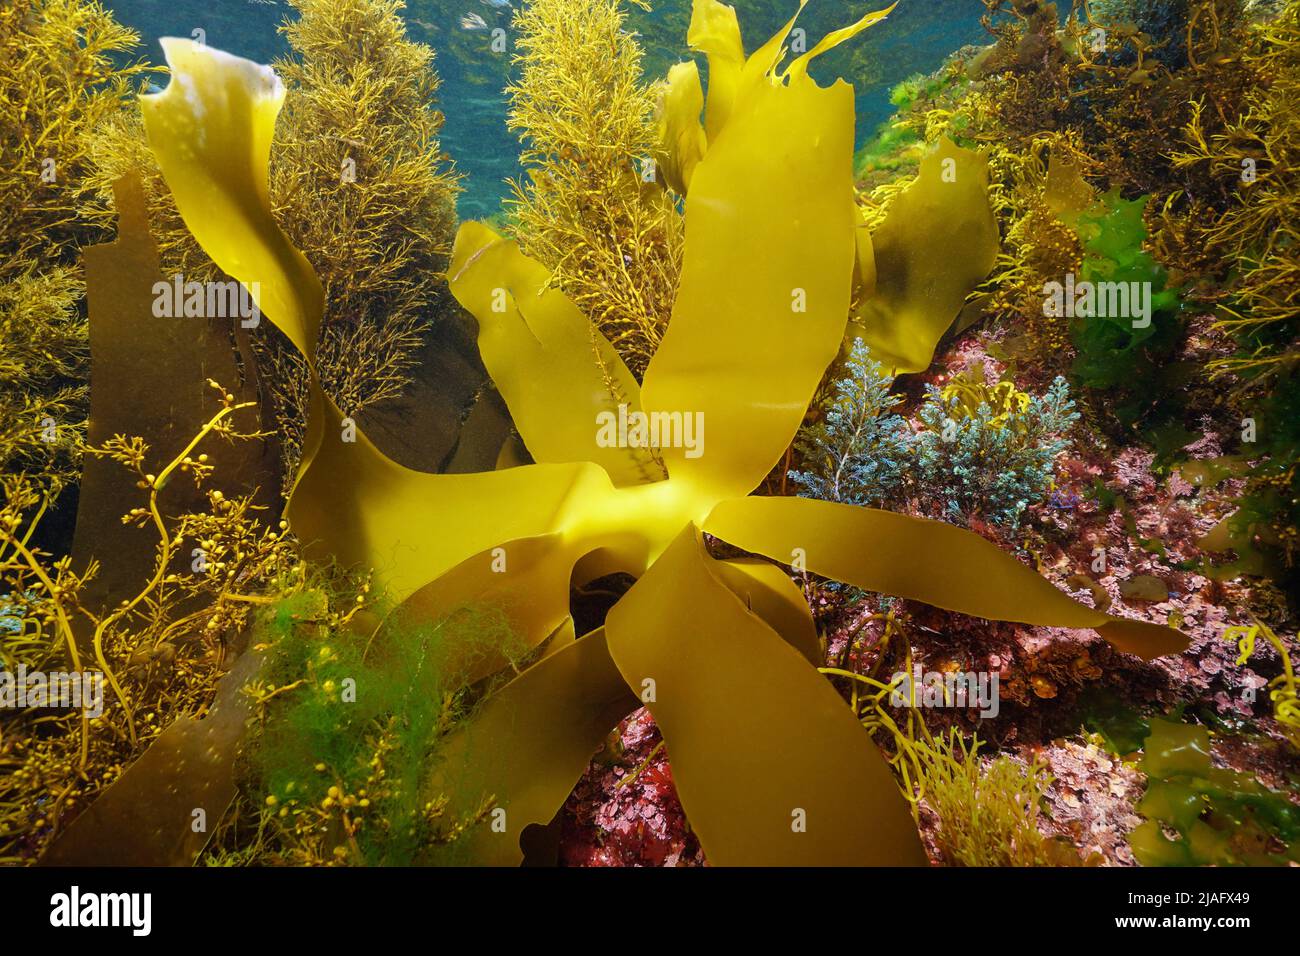 Diverses algues marines sous l'eau, algues marines de l'Atlantique, Espagne Banque D'Images